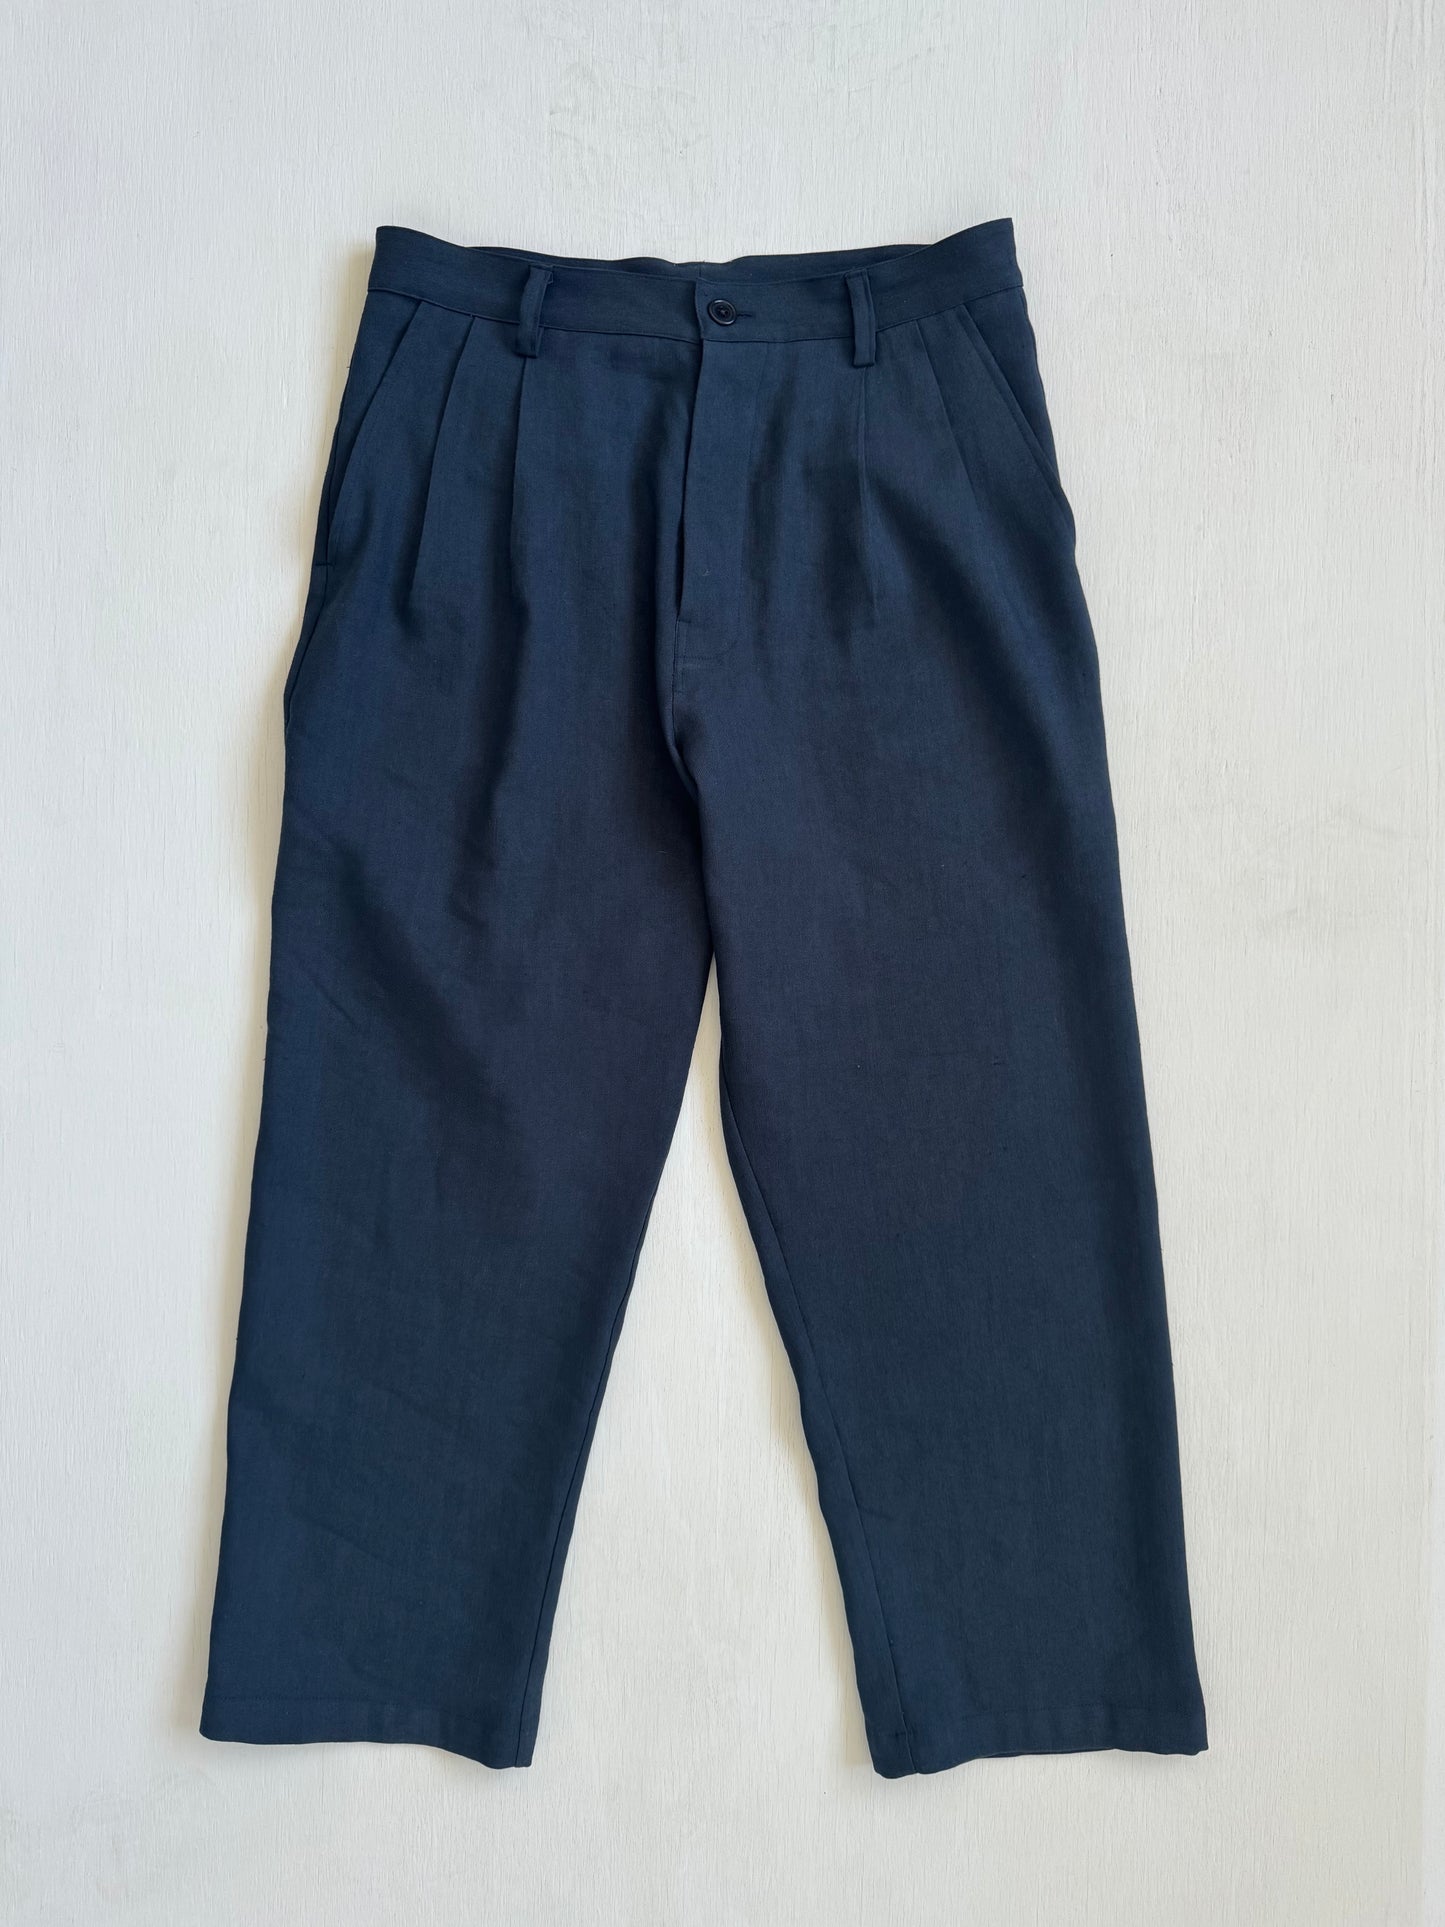 Dress Pants in Navy Wool/Linen Gabardine